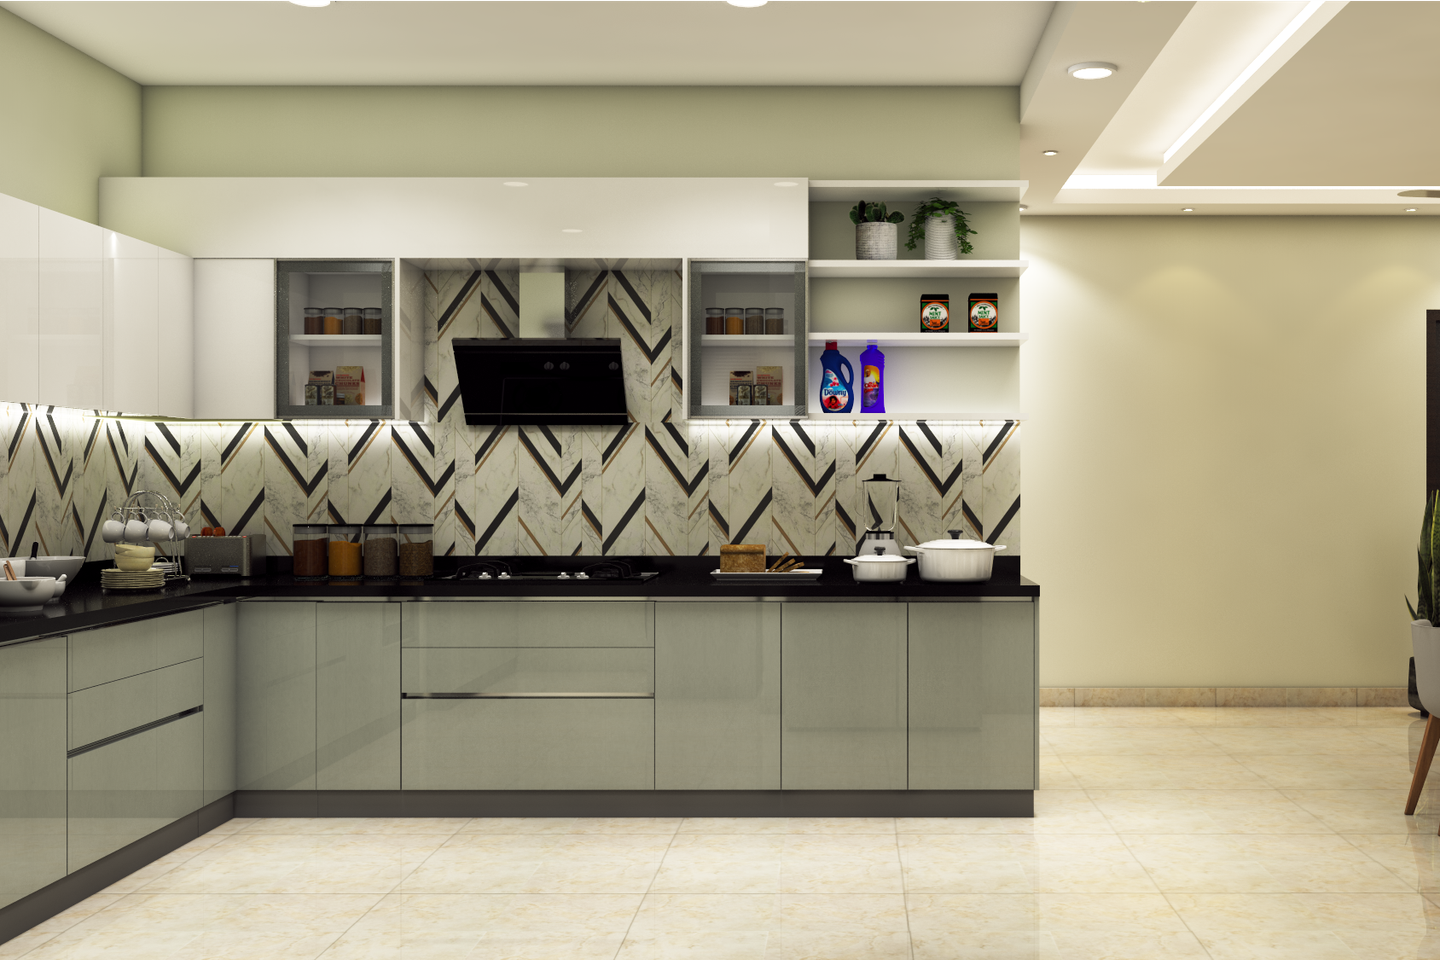 Spacious Modular Kitchen Design For Rental Homes - Livspace